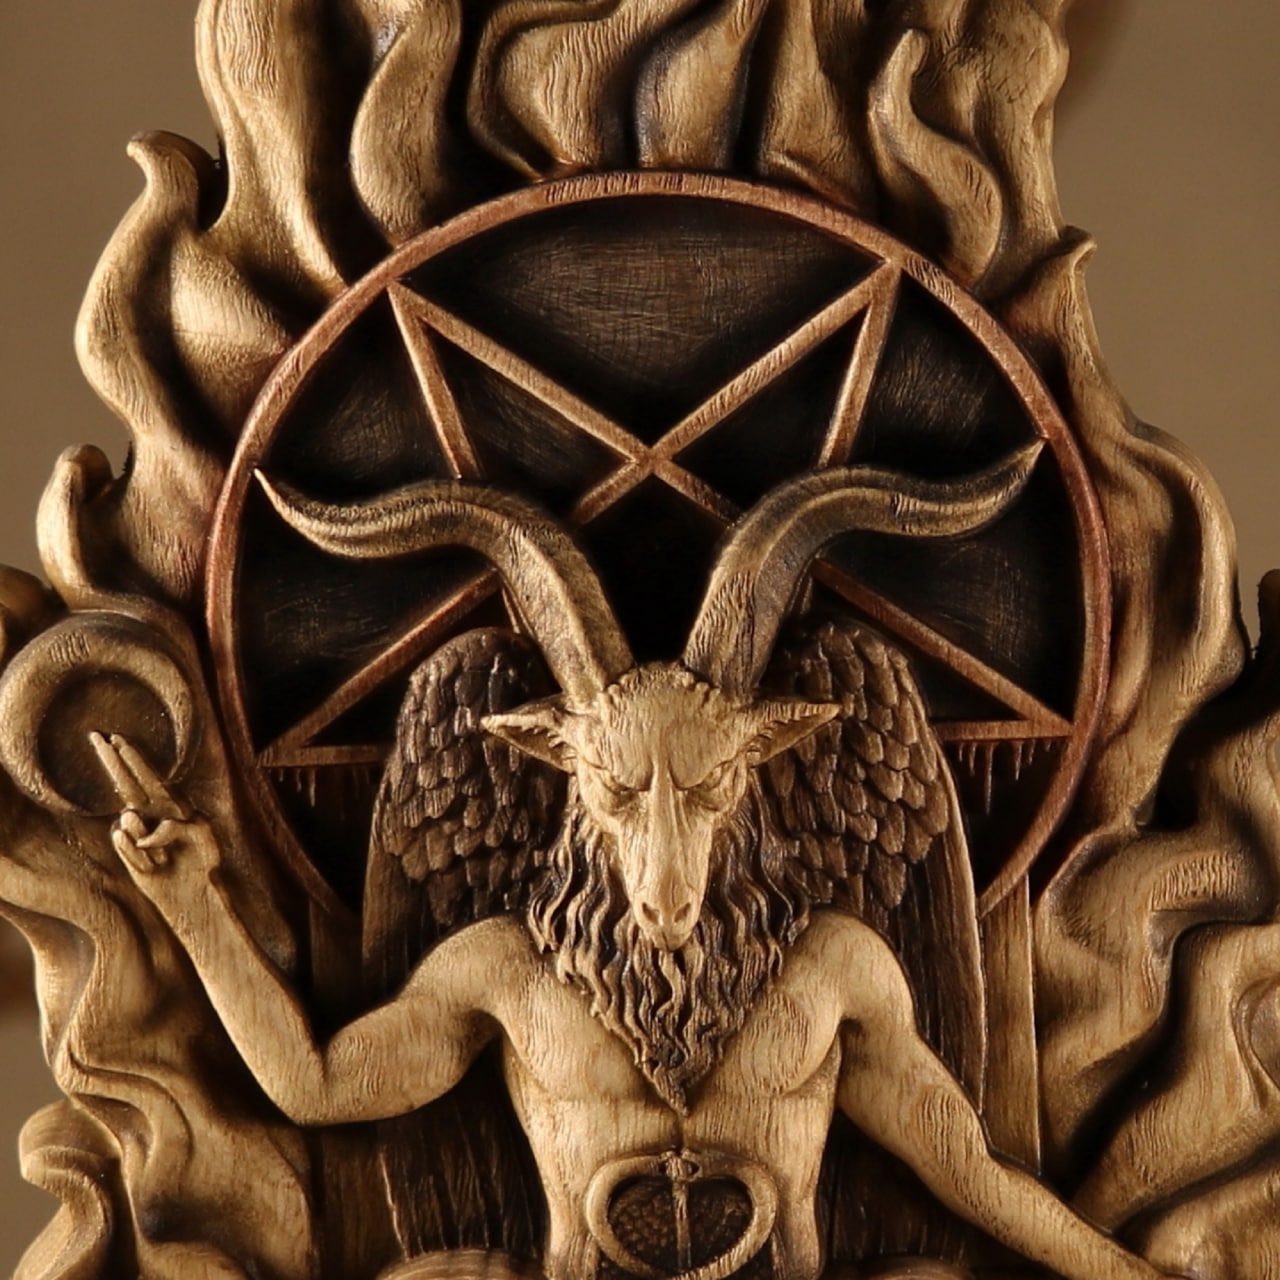 Wooden Baphomet Statue - Devil Sculpture